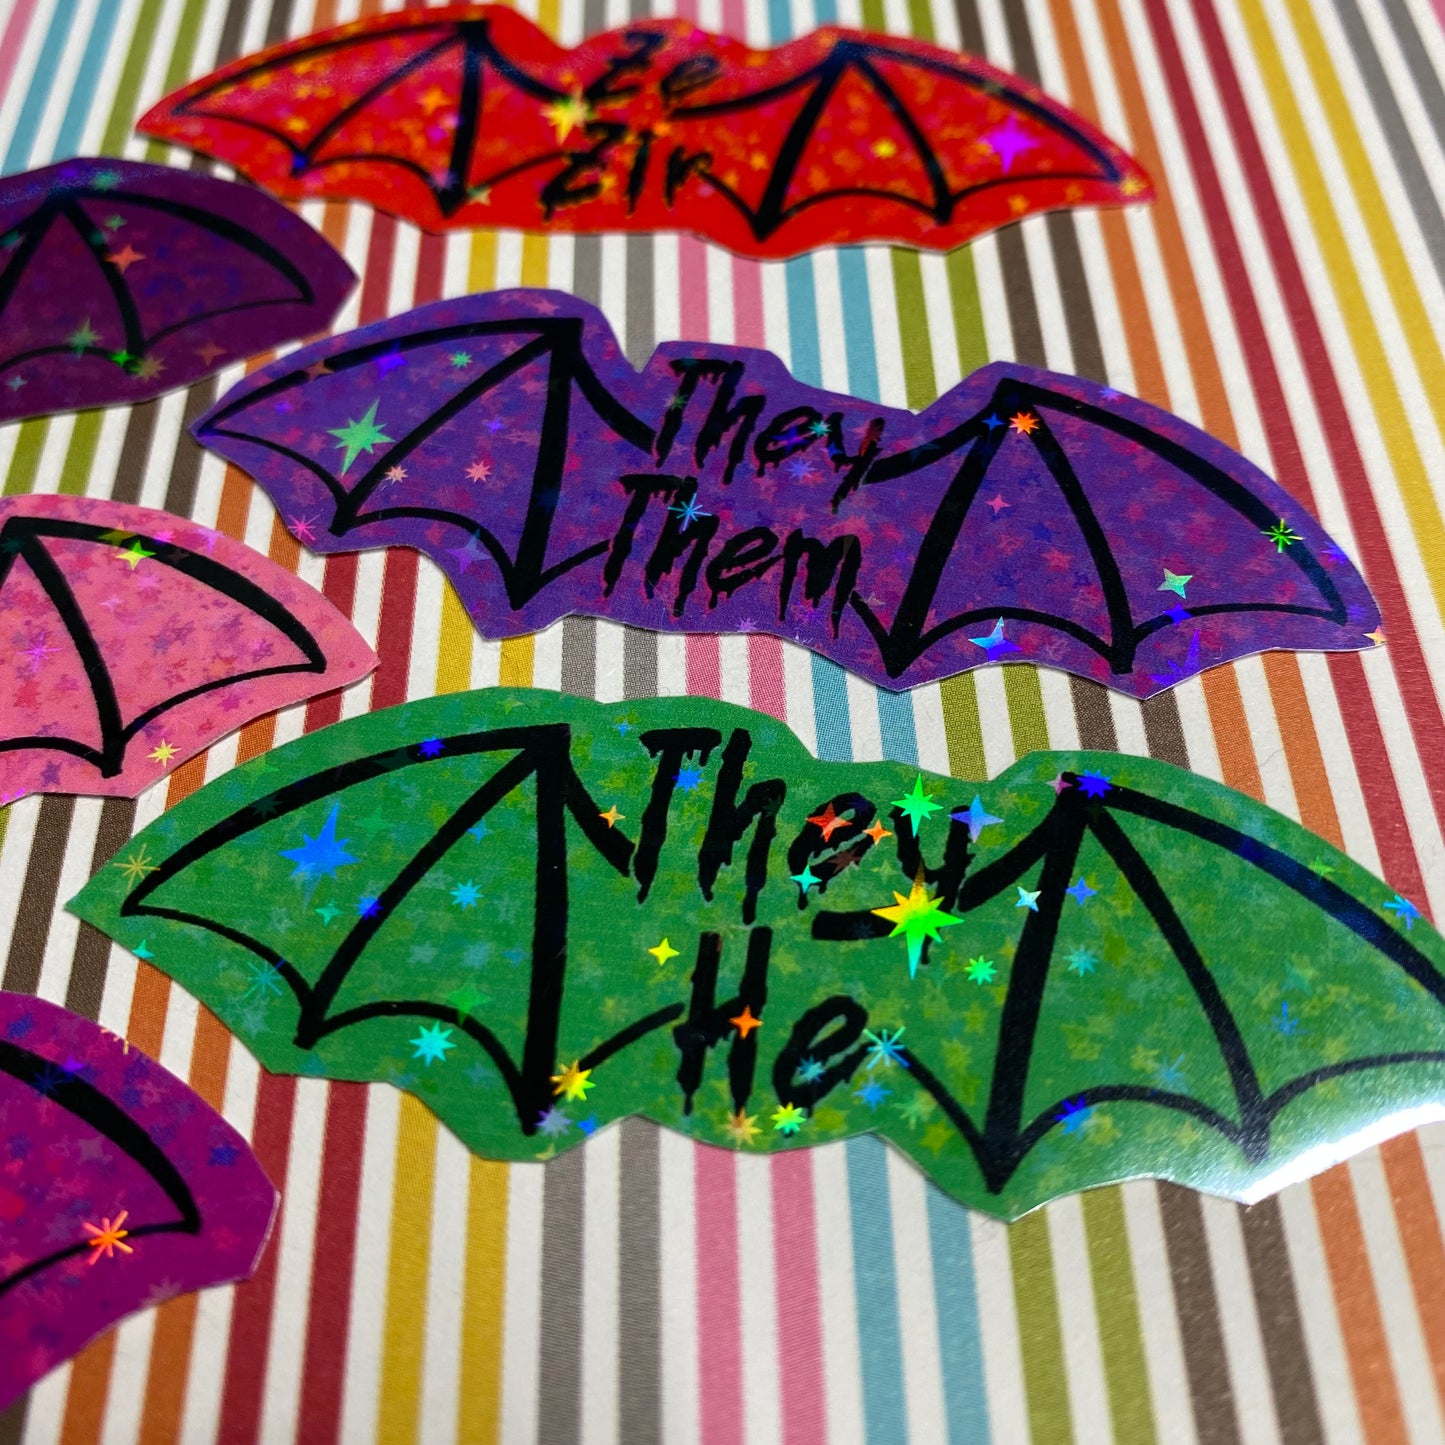 Bat wings pronoun stickers